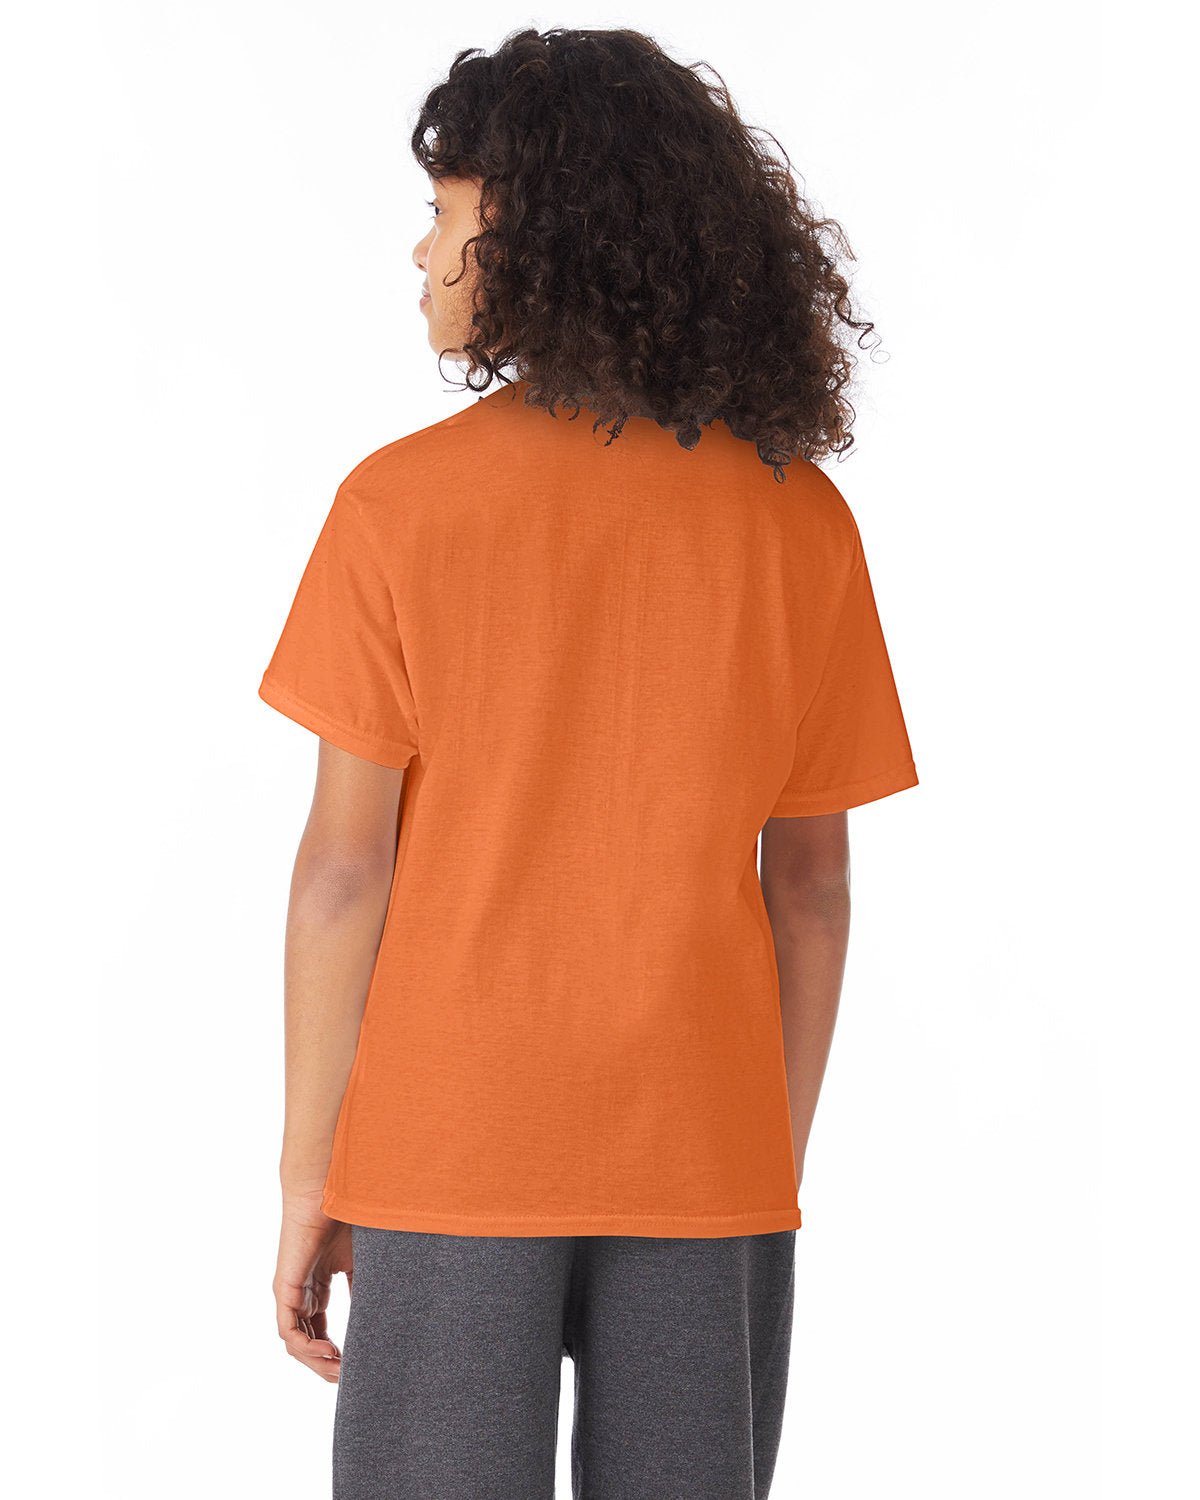 5370-Hanes-SAFETY ORANGE-Hanes-T-Shirts-2